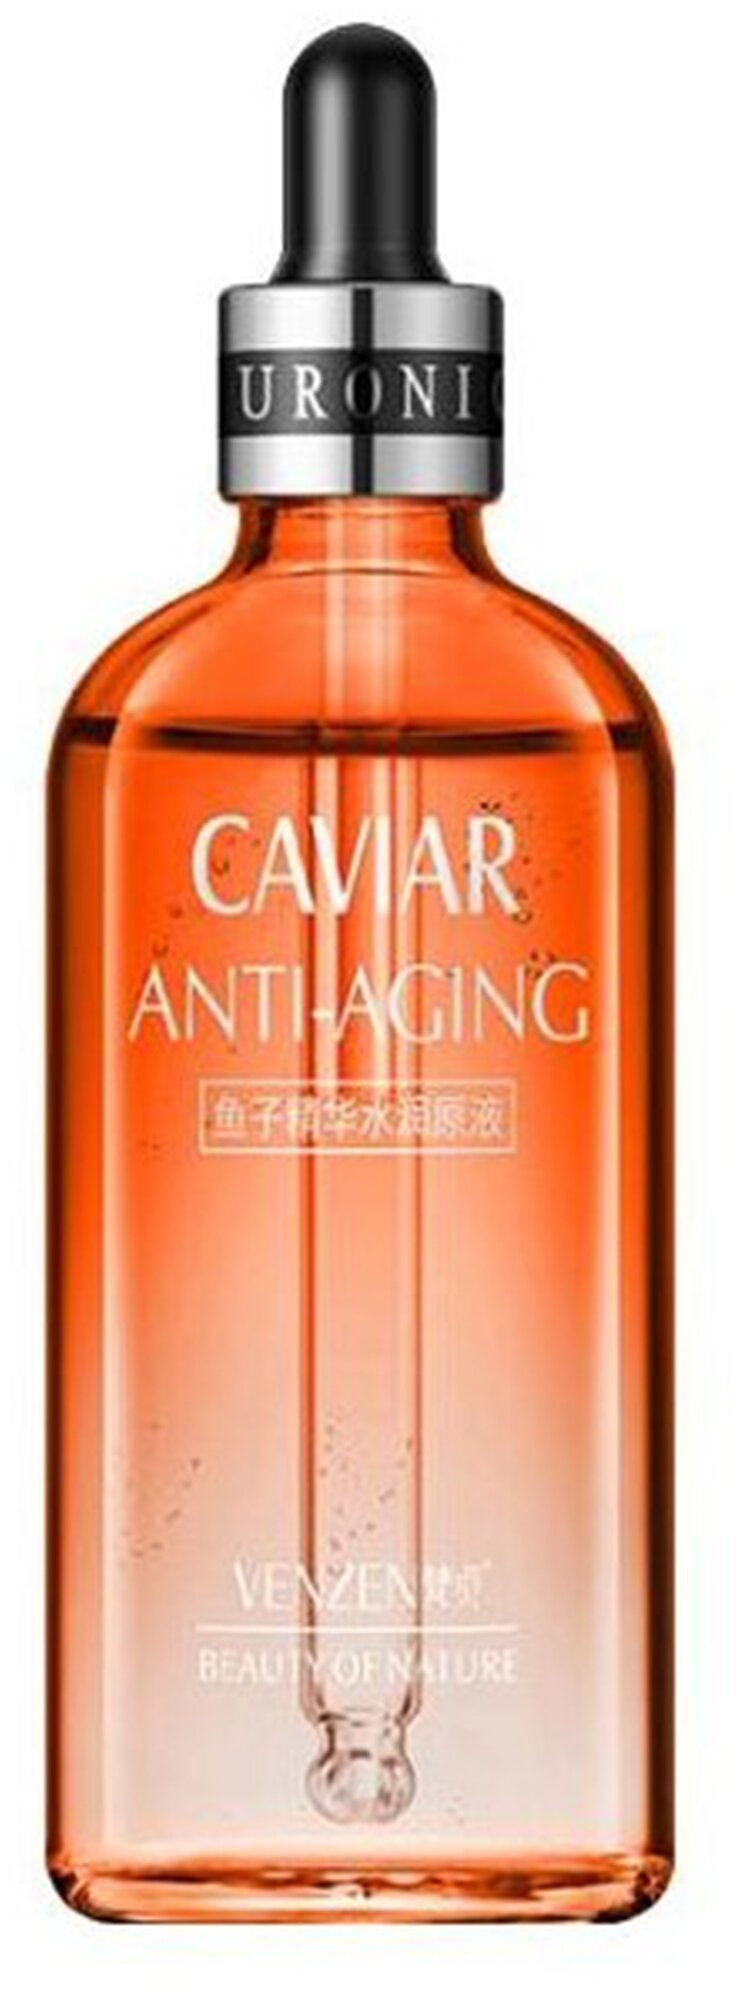 Сыворотка для лица Caviar Anti-Aging, 100 мл